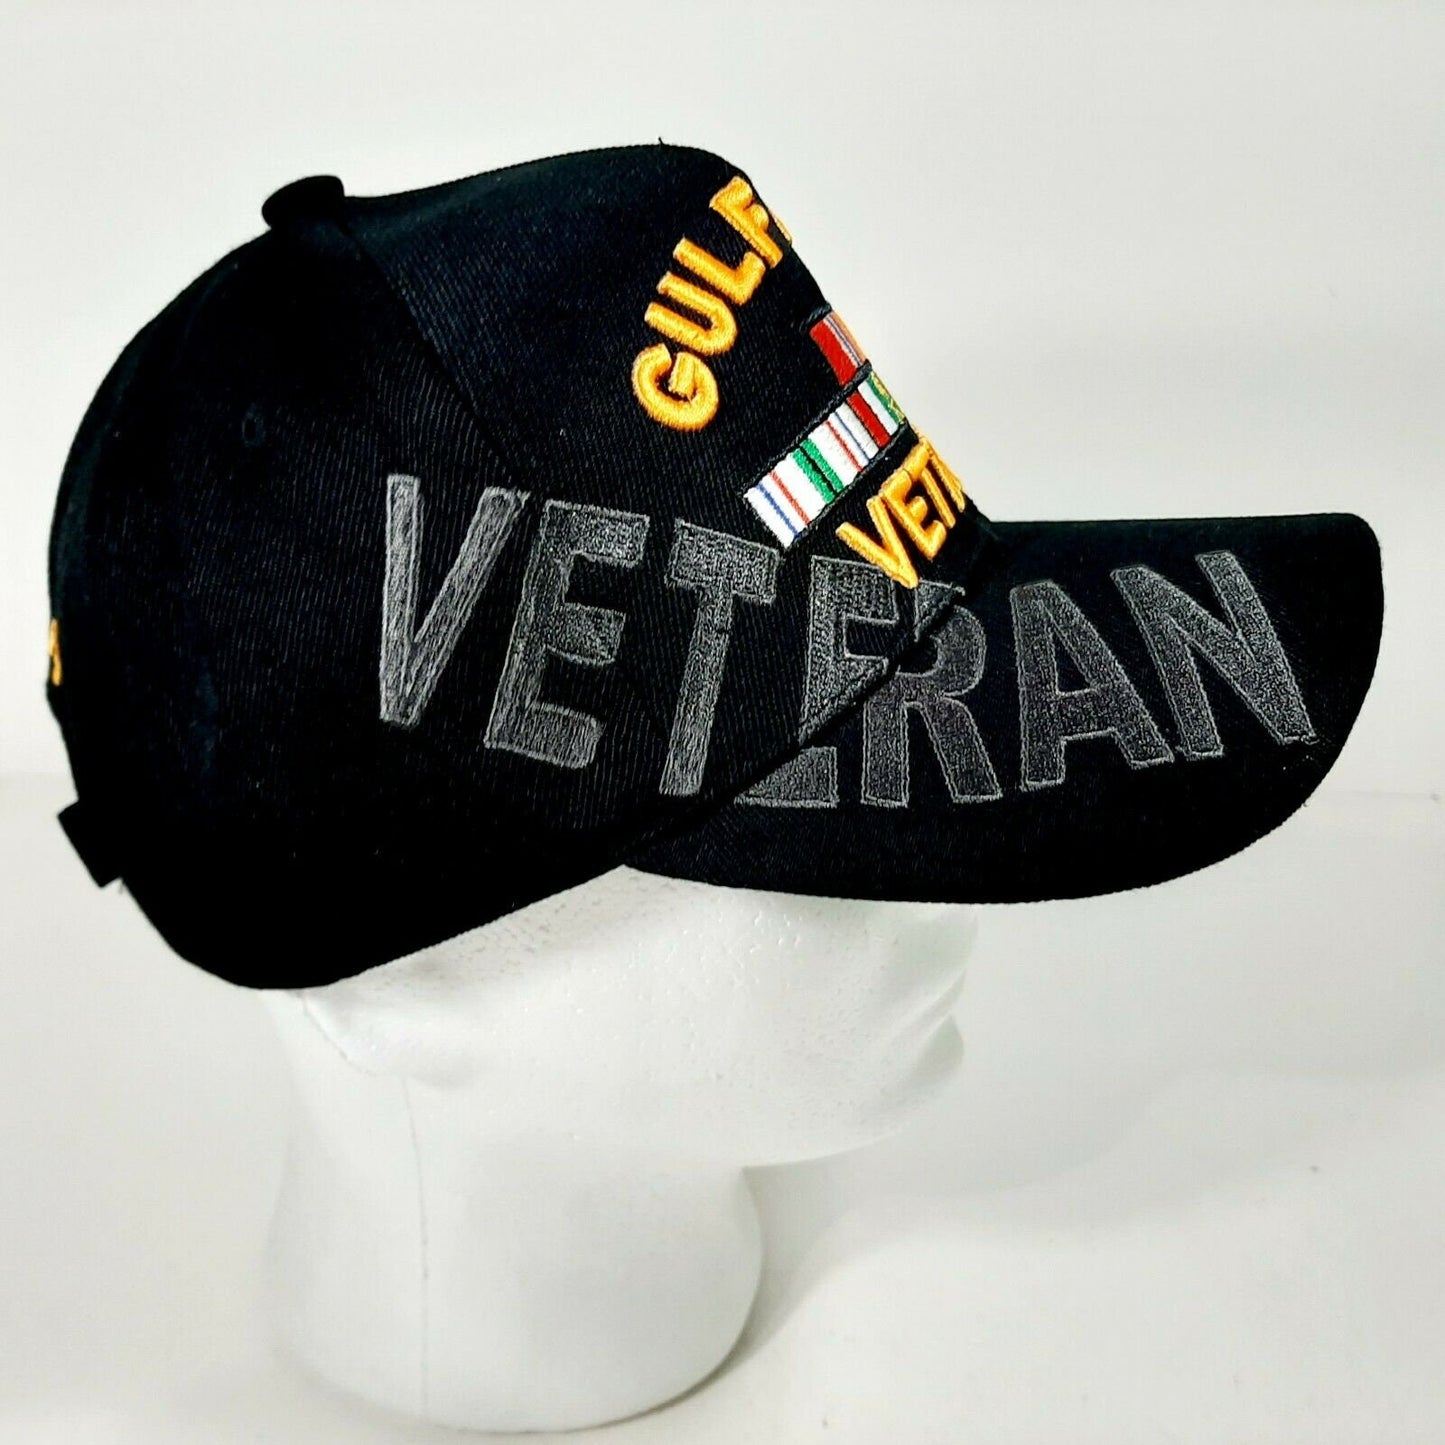 Gulf War Veteran Men's Ball Cap Hat Black Embroidered Acrylic